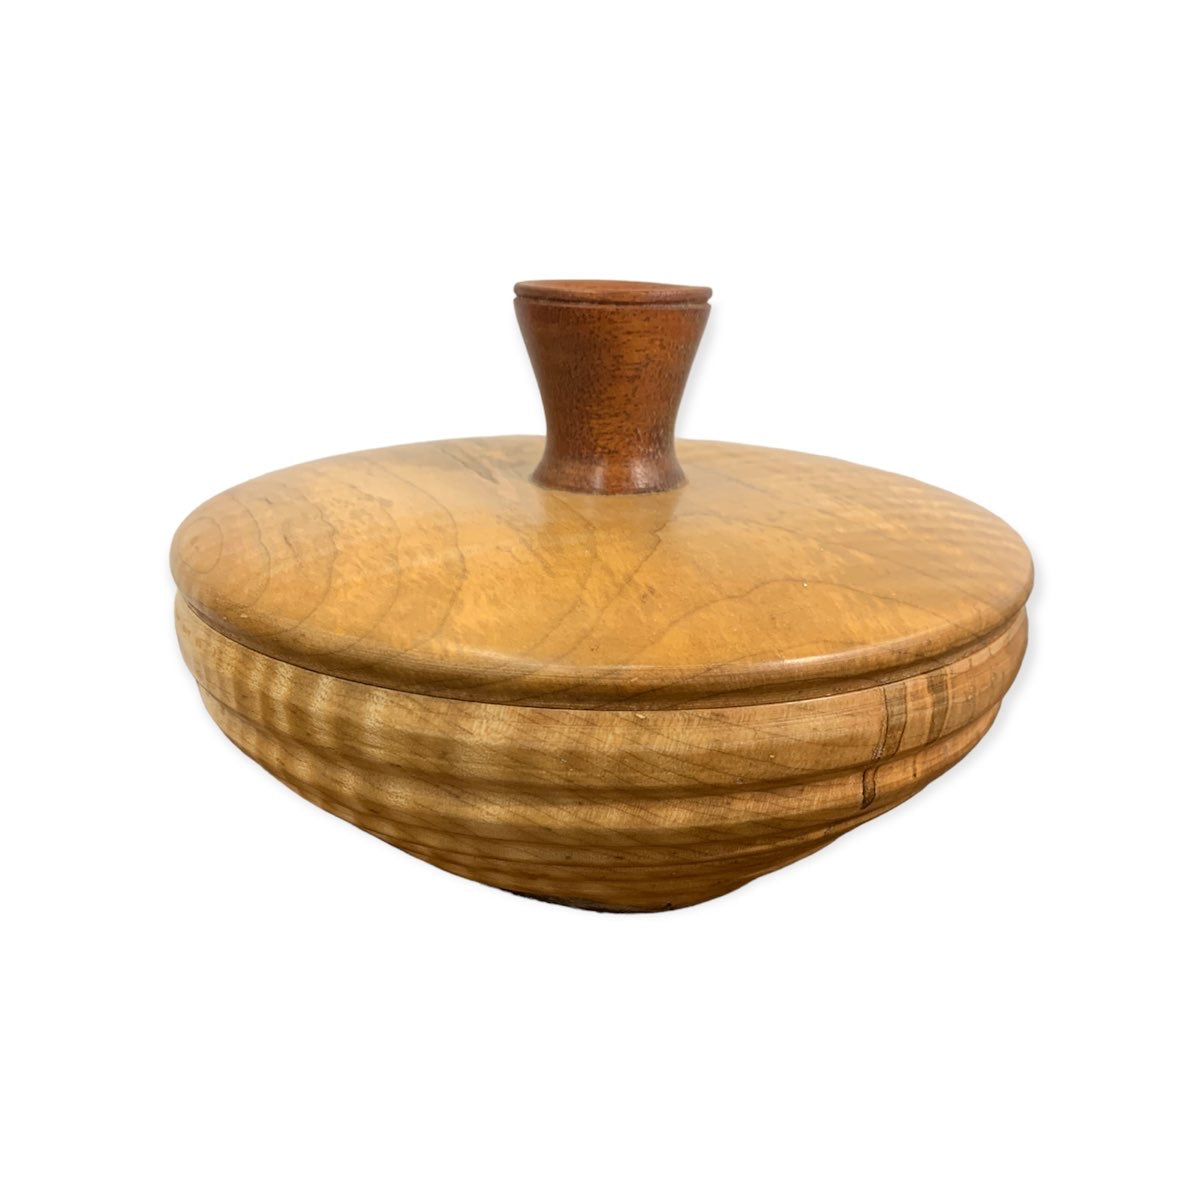 Wood Bowl with Lid - Maple & Mahogany by Jon Van Der Nol